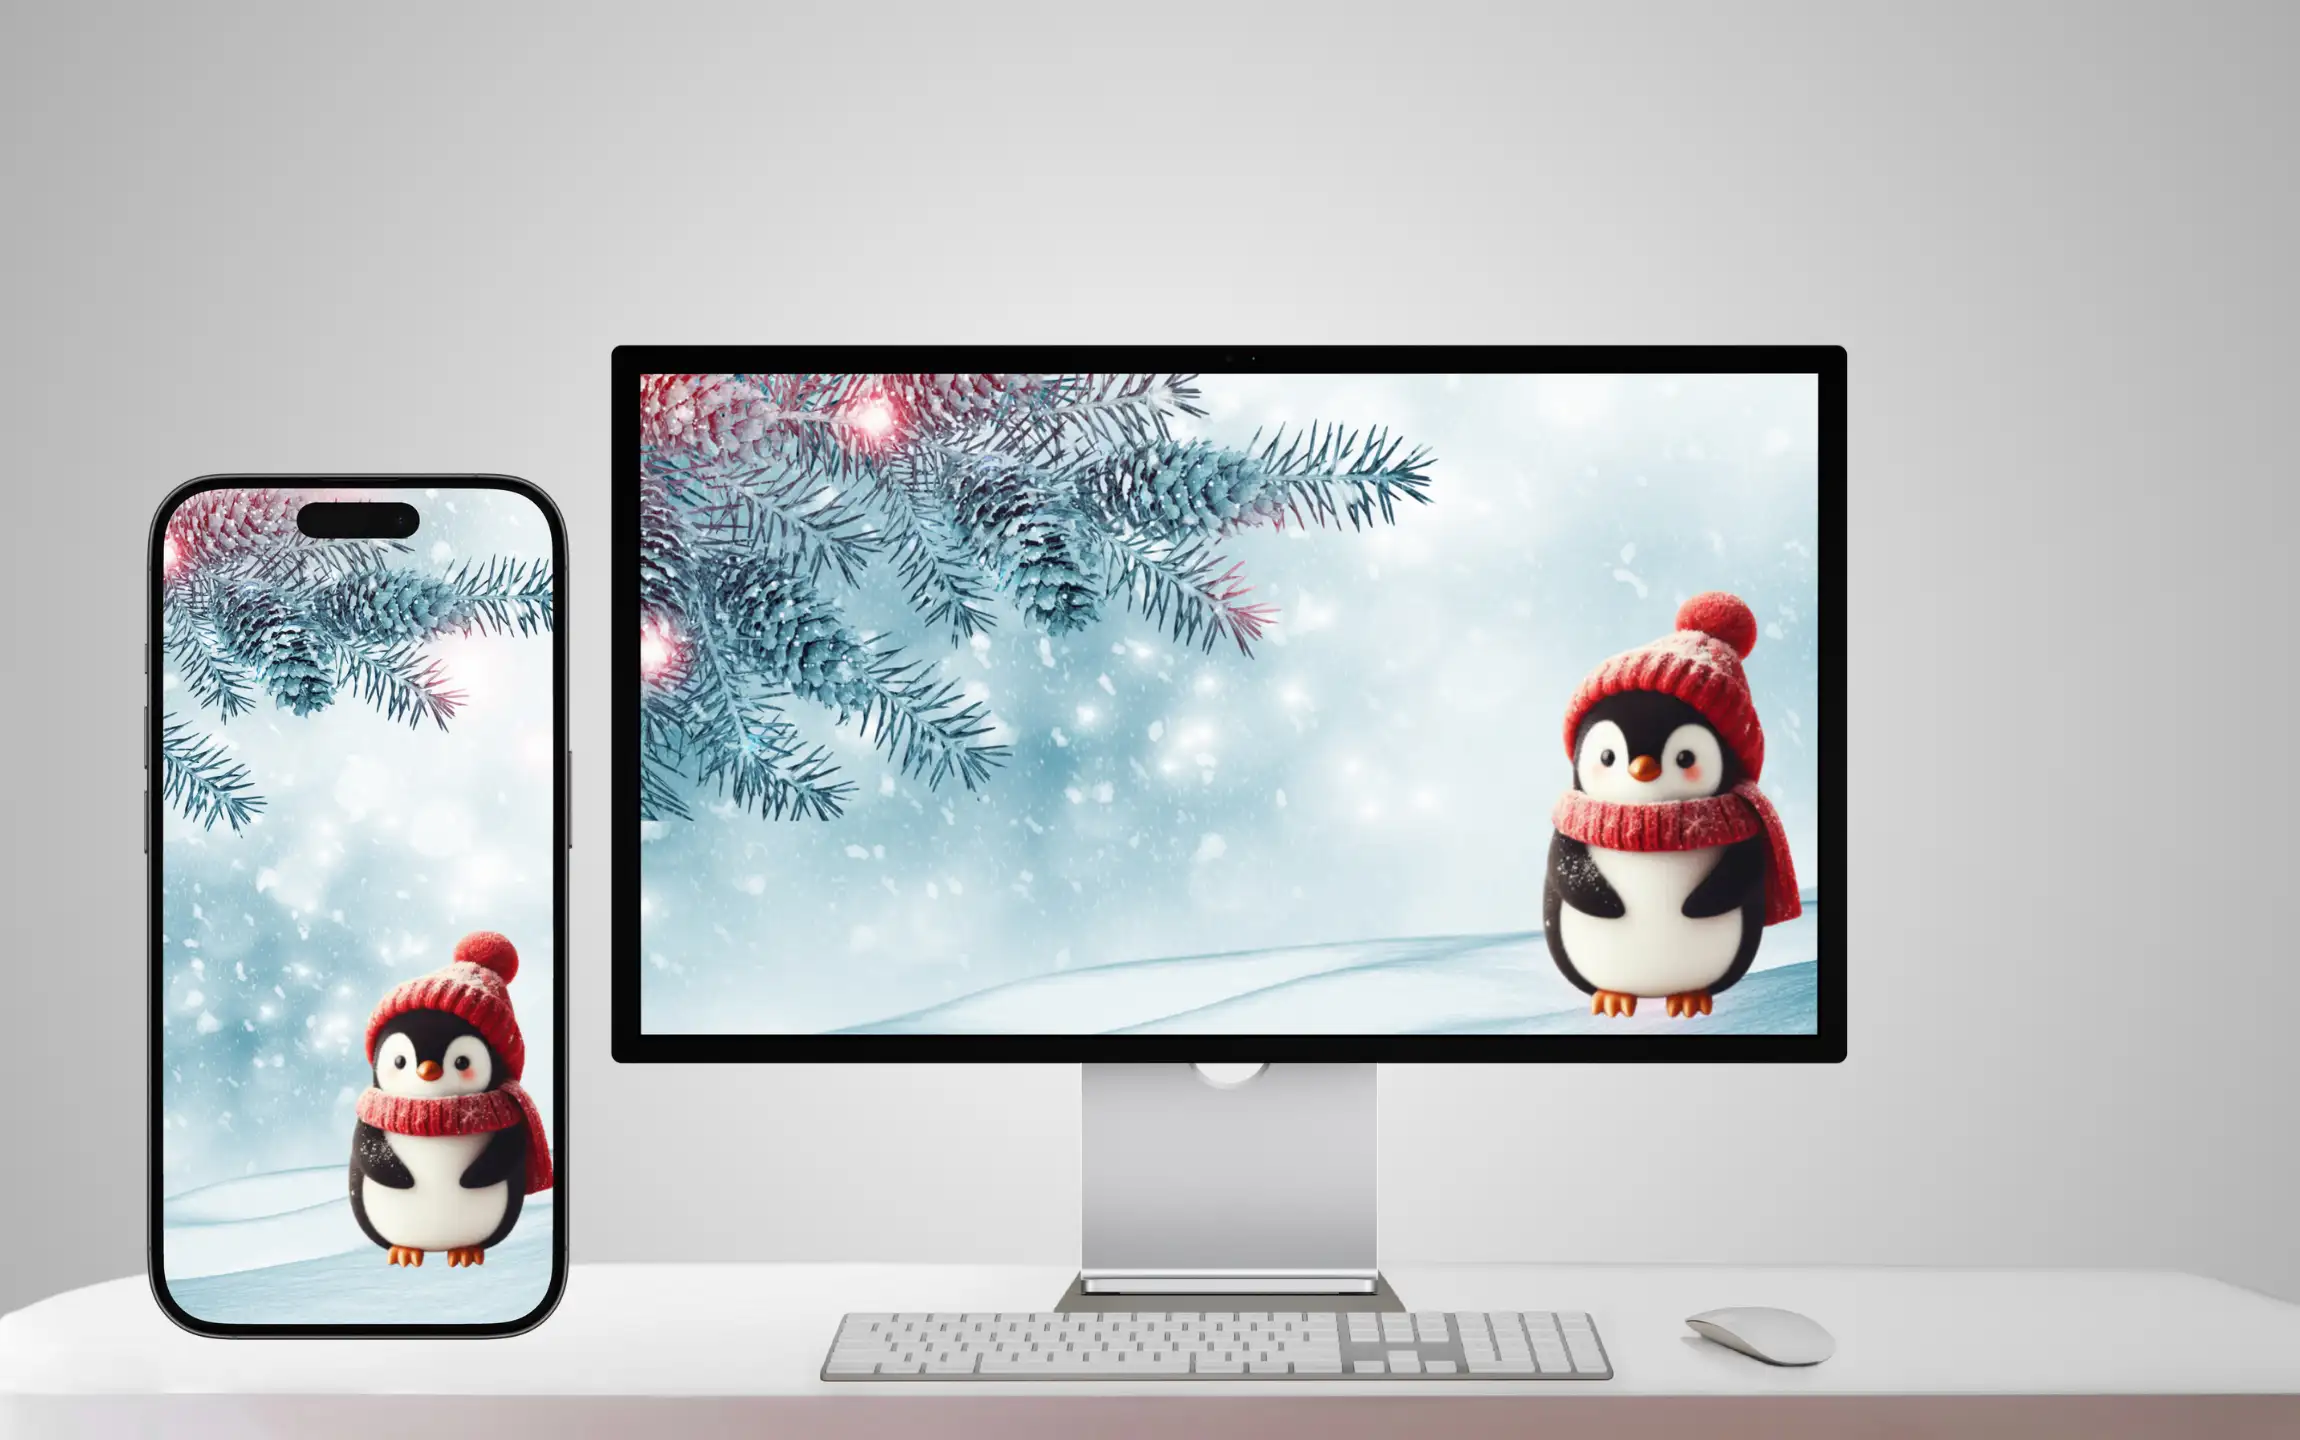 Penguin winter wallpaper for iPhone and Macbook